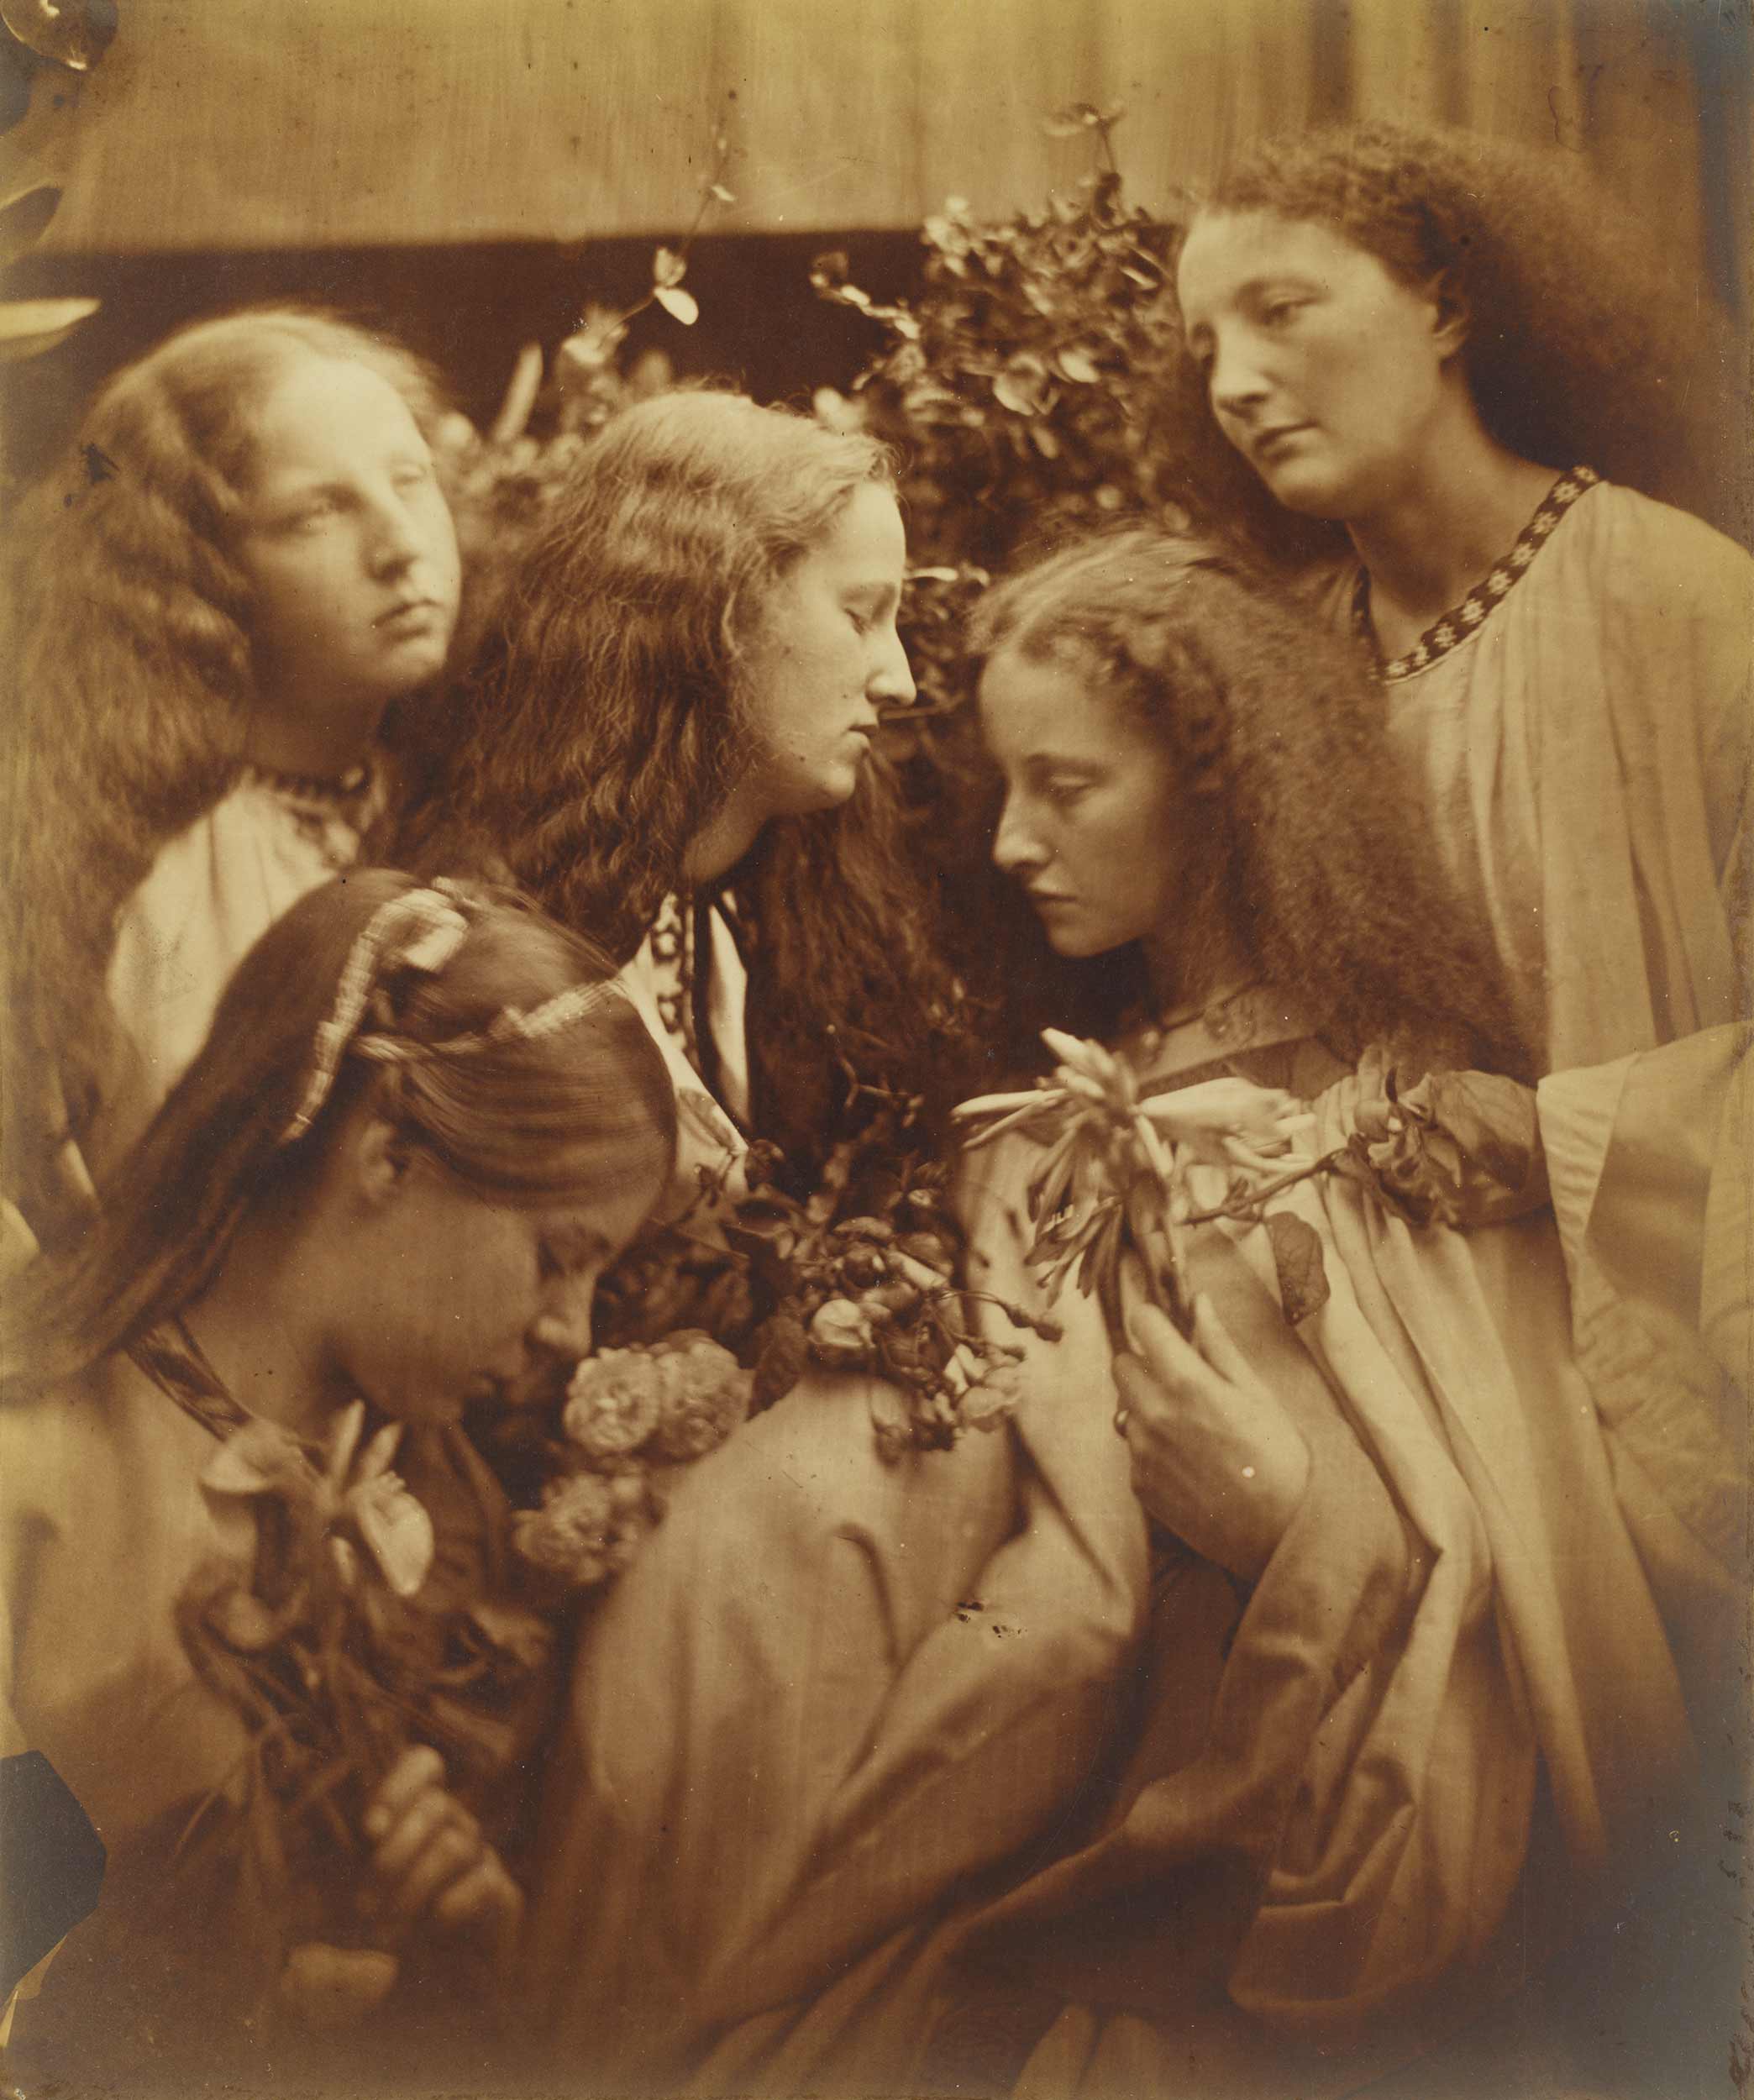 The Rosebud Garden of Girls [La roseraie des jeunes filles],